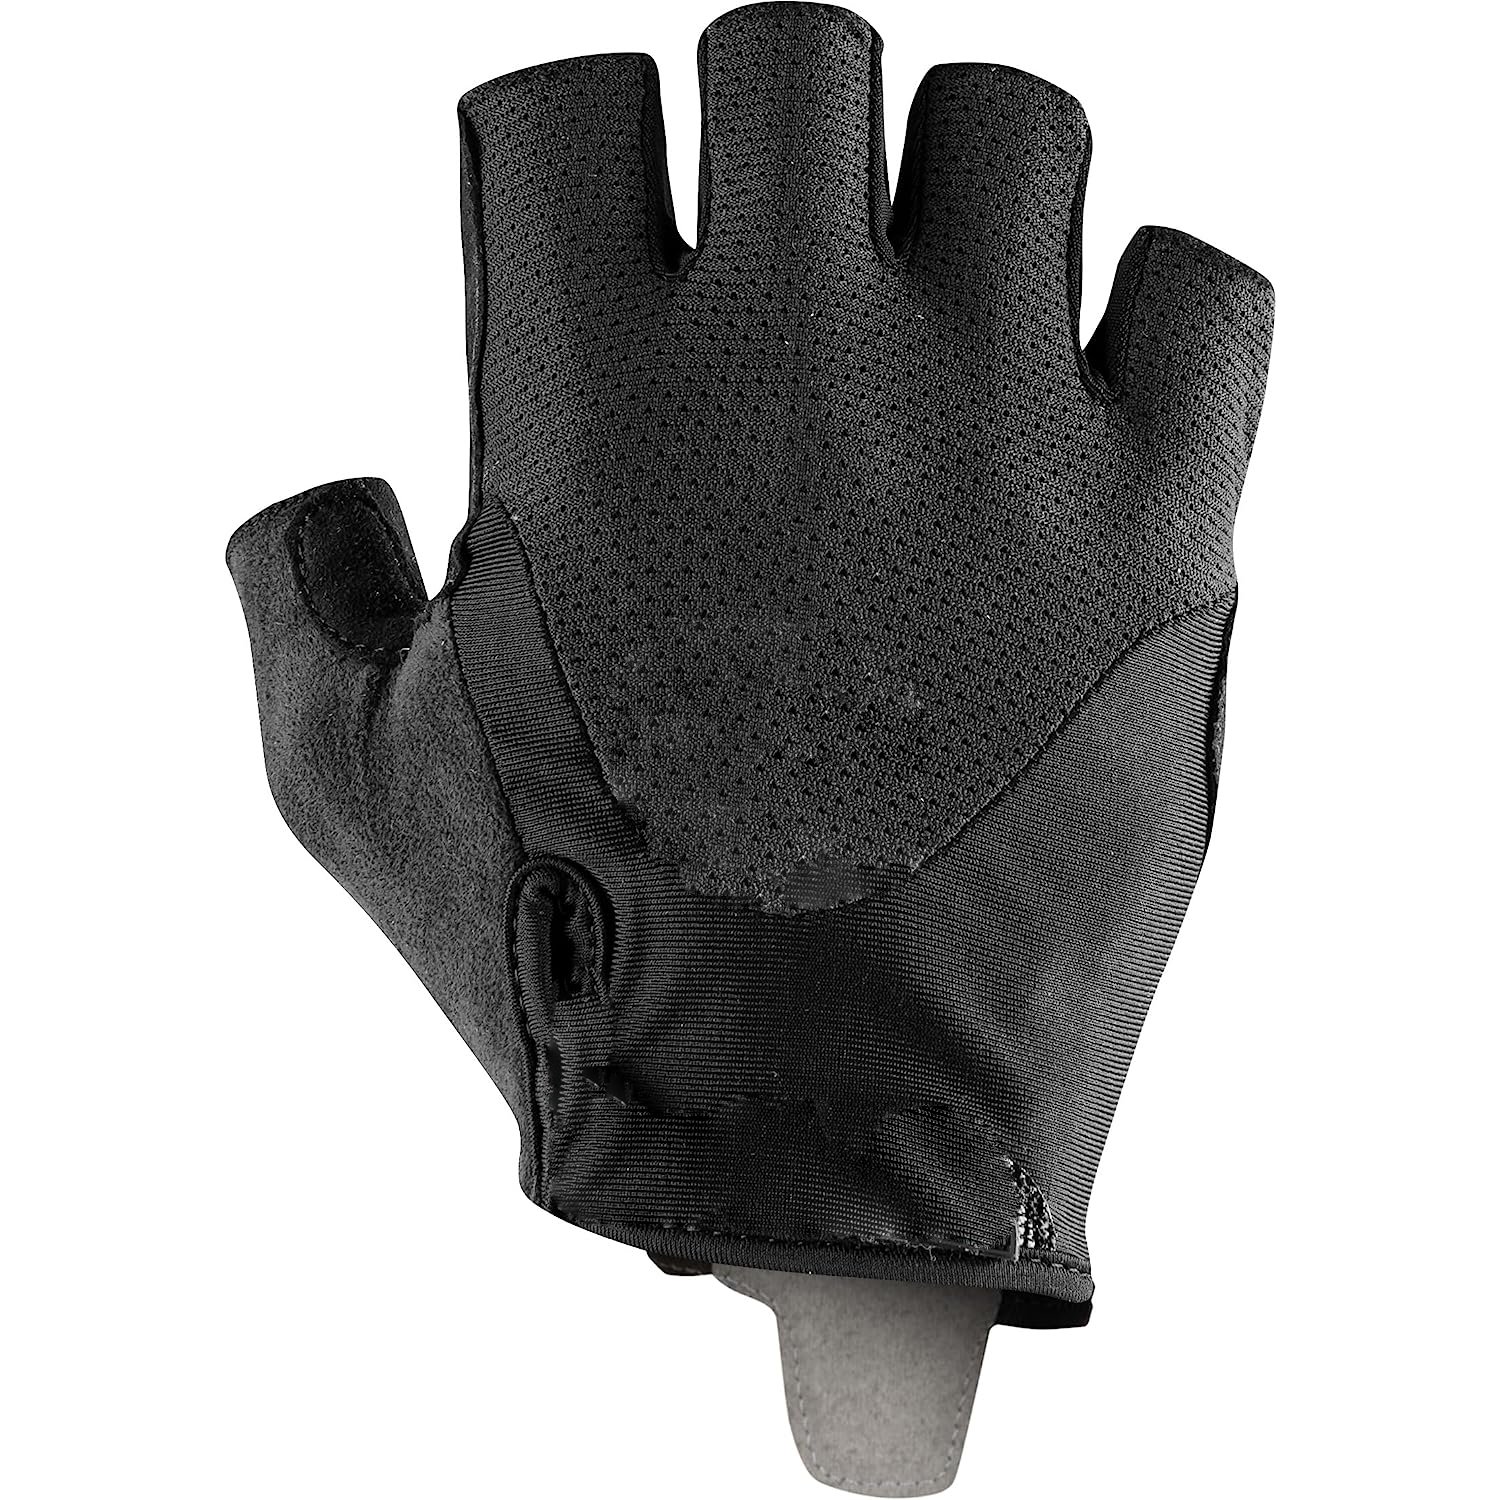 Pagbisikleta Arenberg Gel 2 Glove para sa Dalan ug Gravel Biking l Pagbisikleta